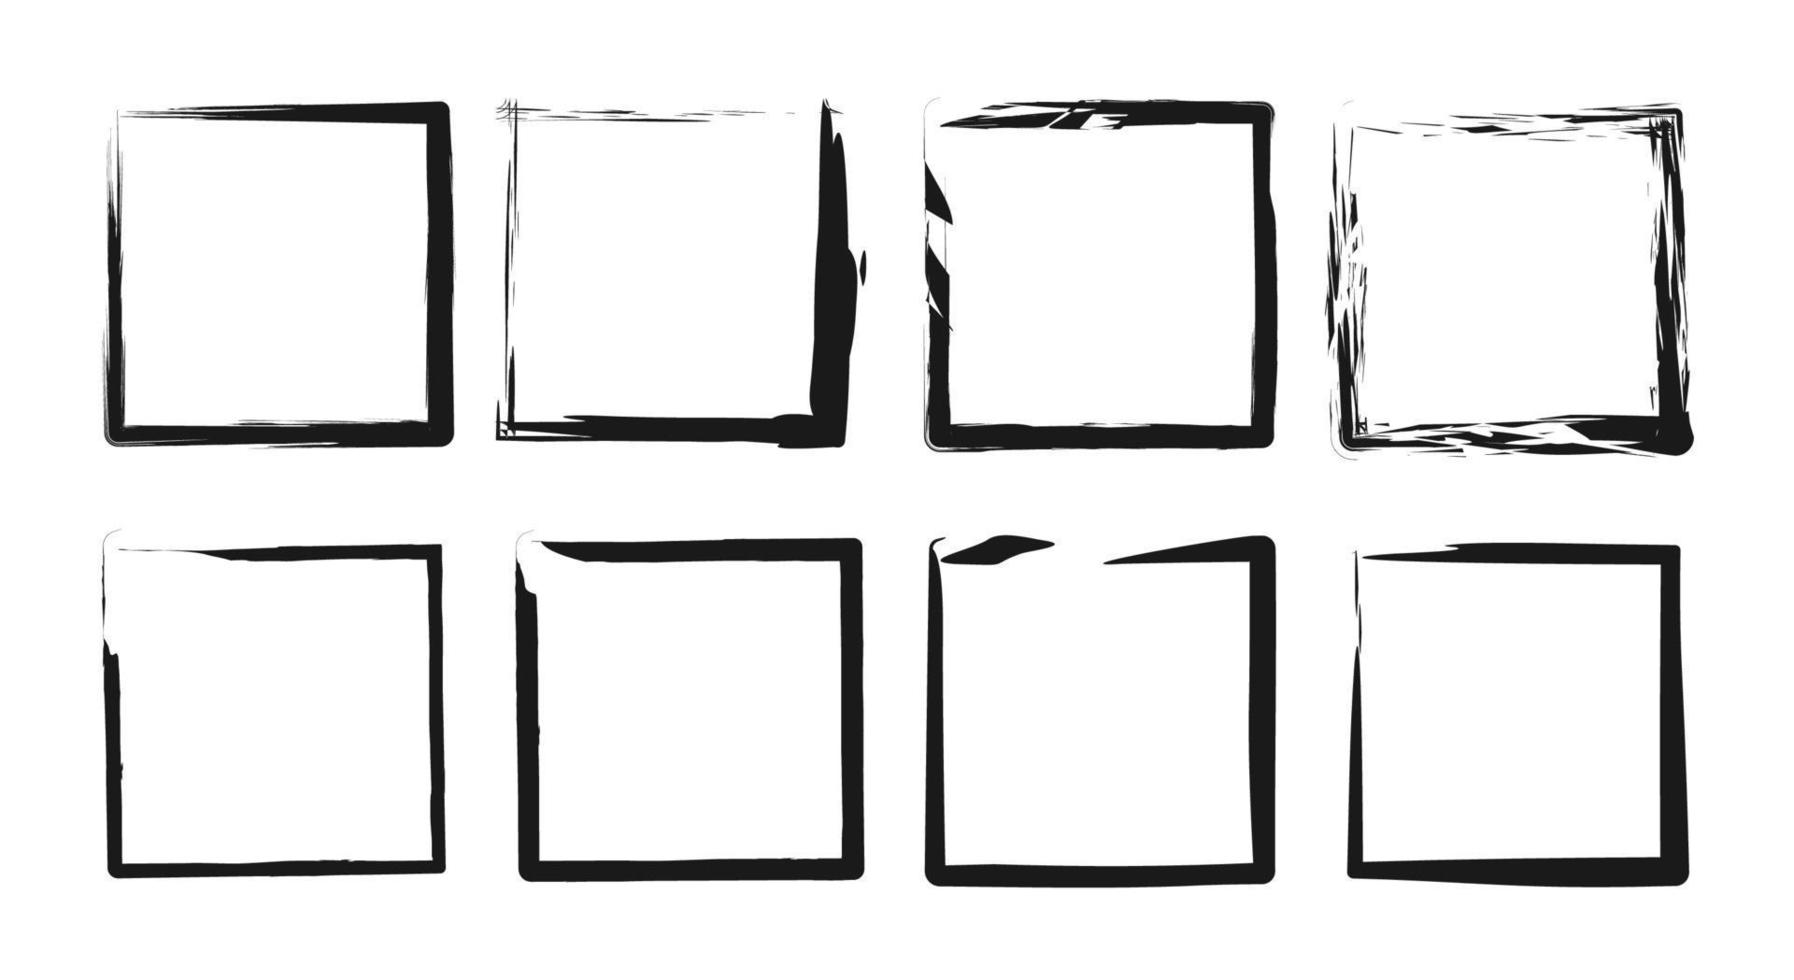 A set of grunge square frames in black. Vector elements for design design. Universal symbols and elements.